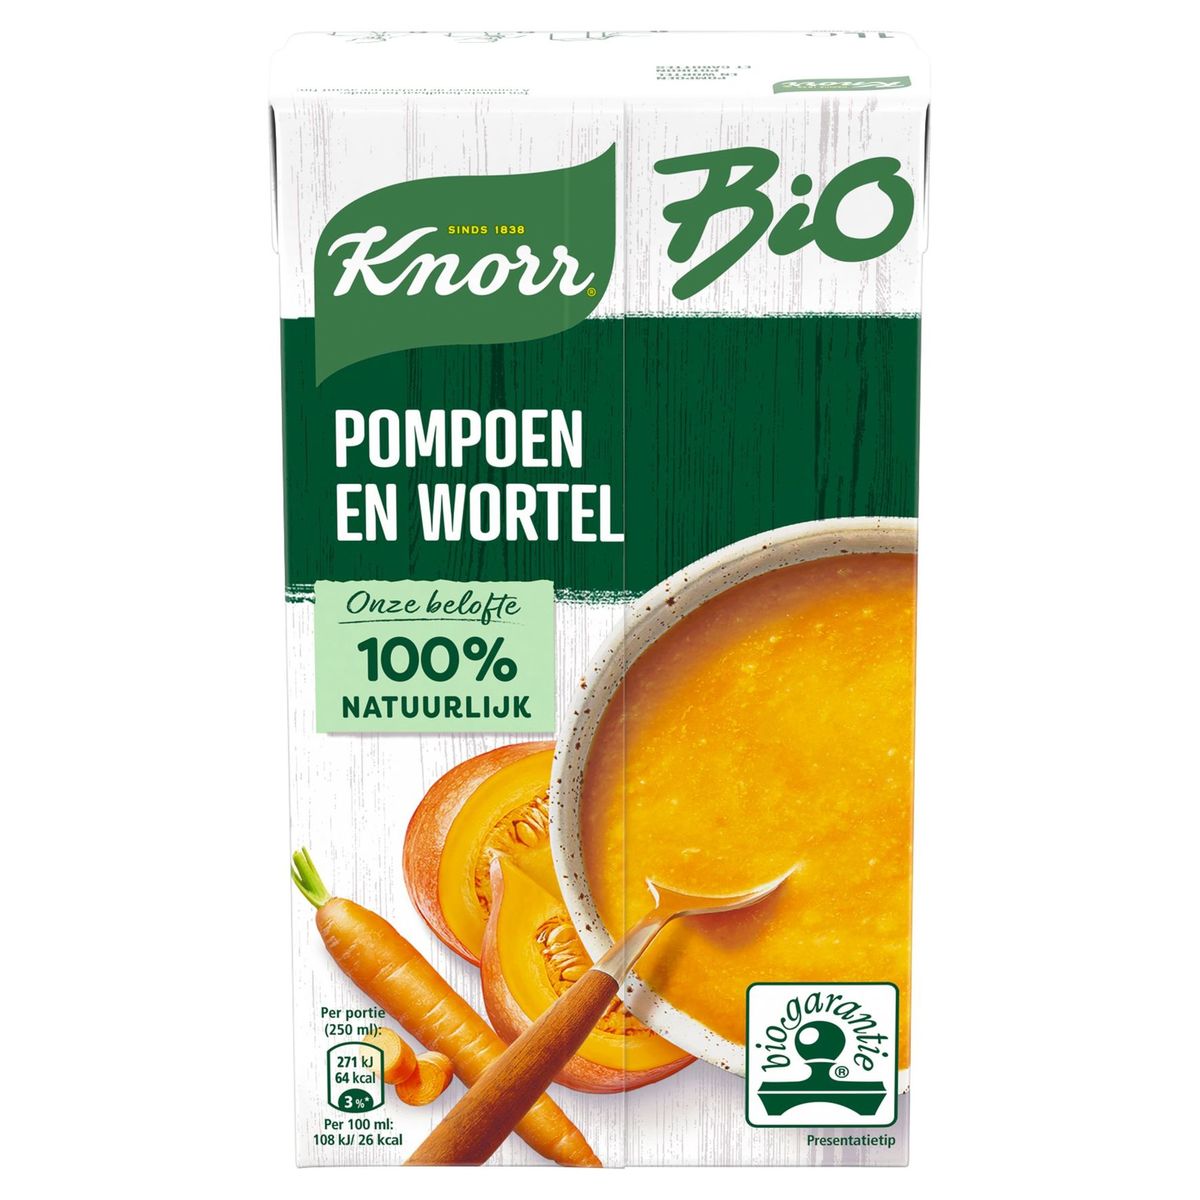 Knorr Bio Soupe Potiron et Carottes Bio 1 L